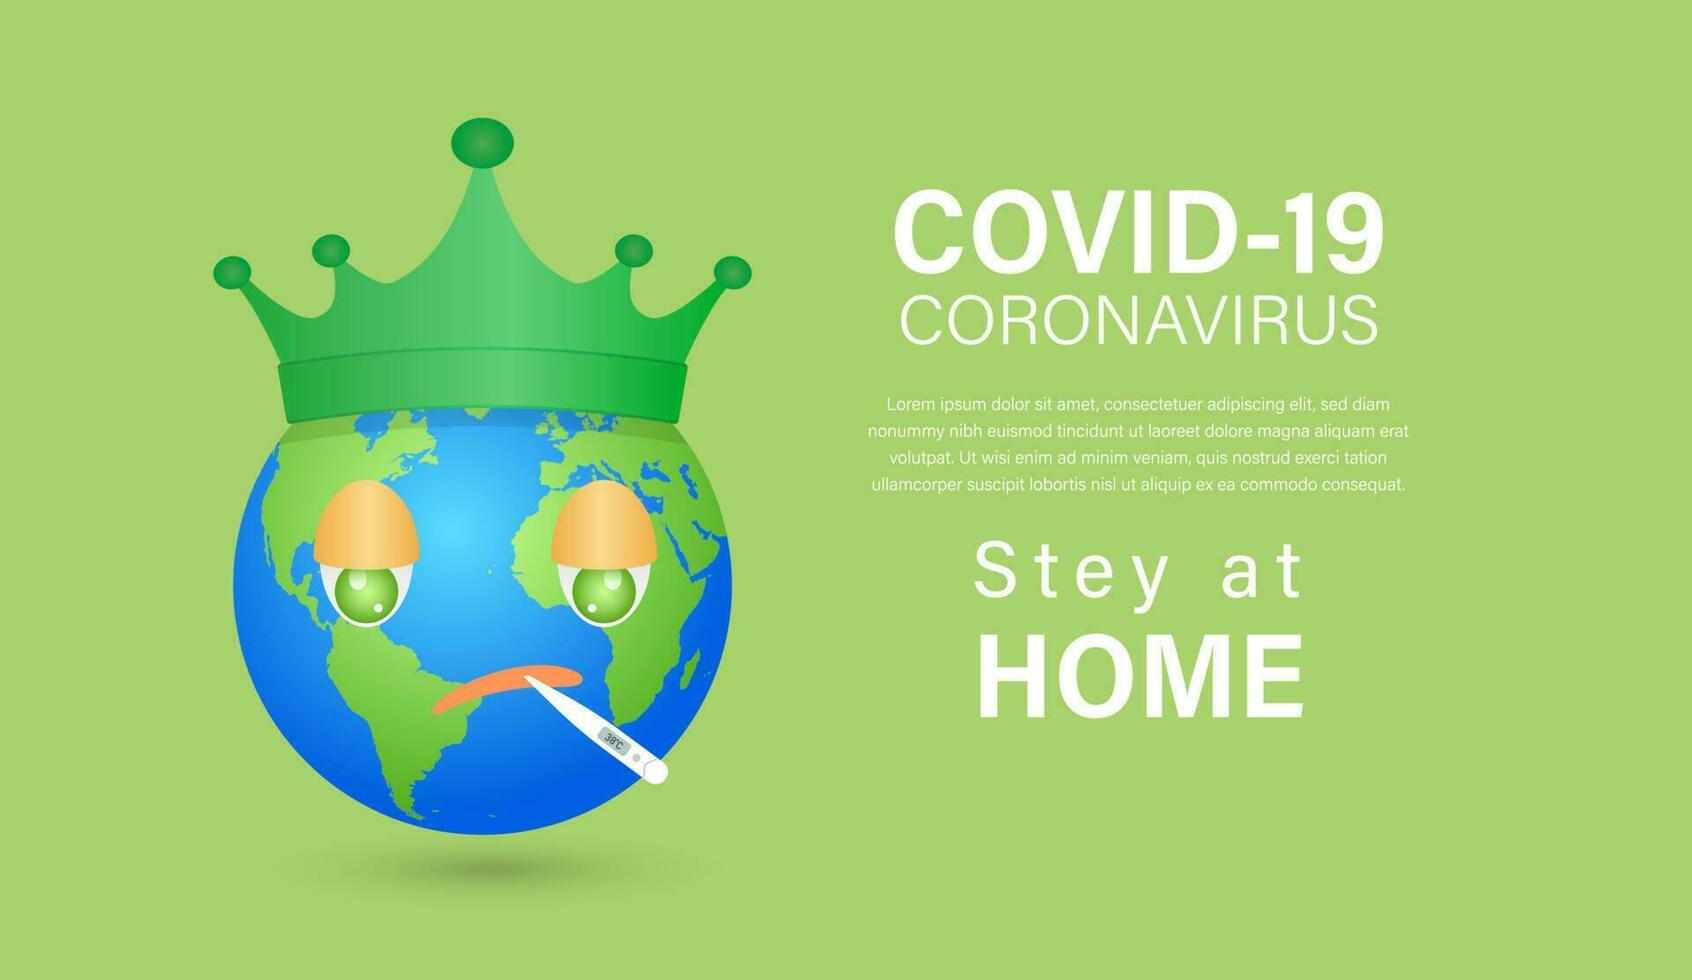 Stay at home - self isolation to prevent spreading coronavirus. Quarantine poster sign design vector